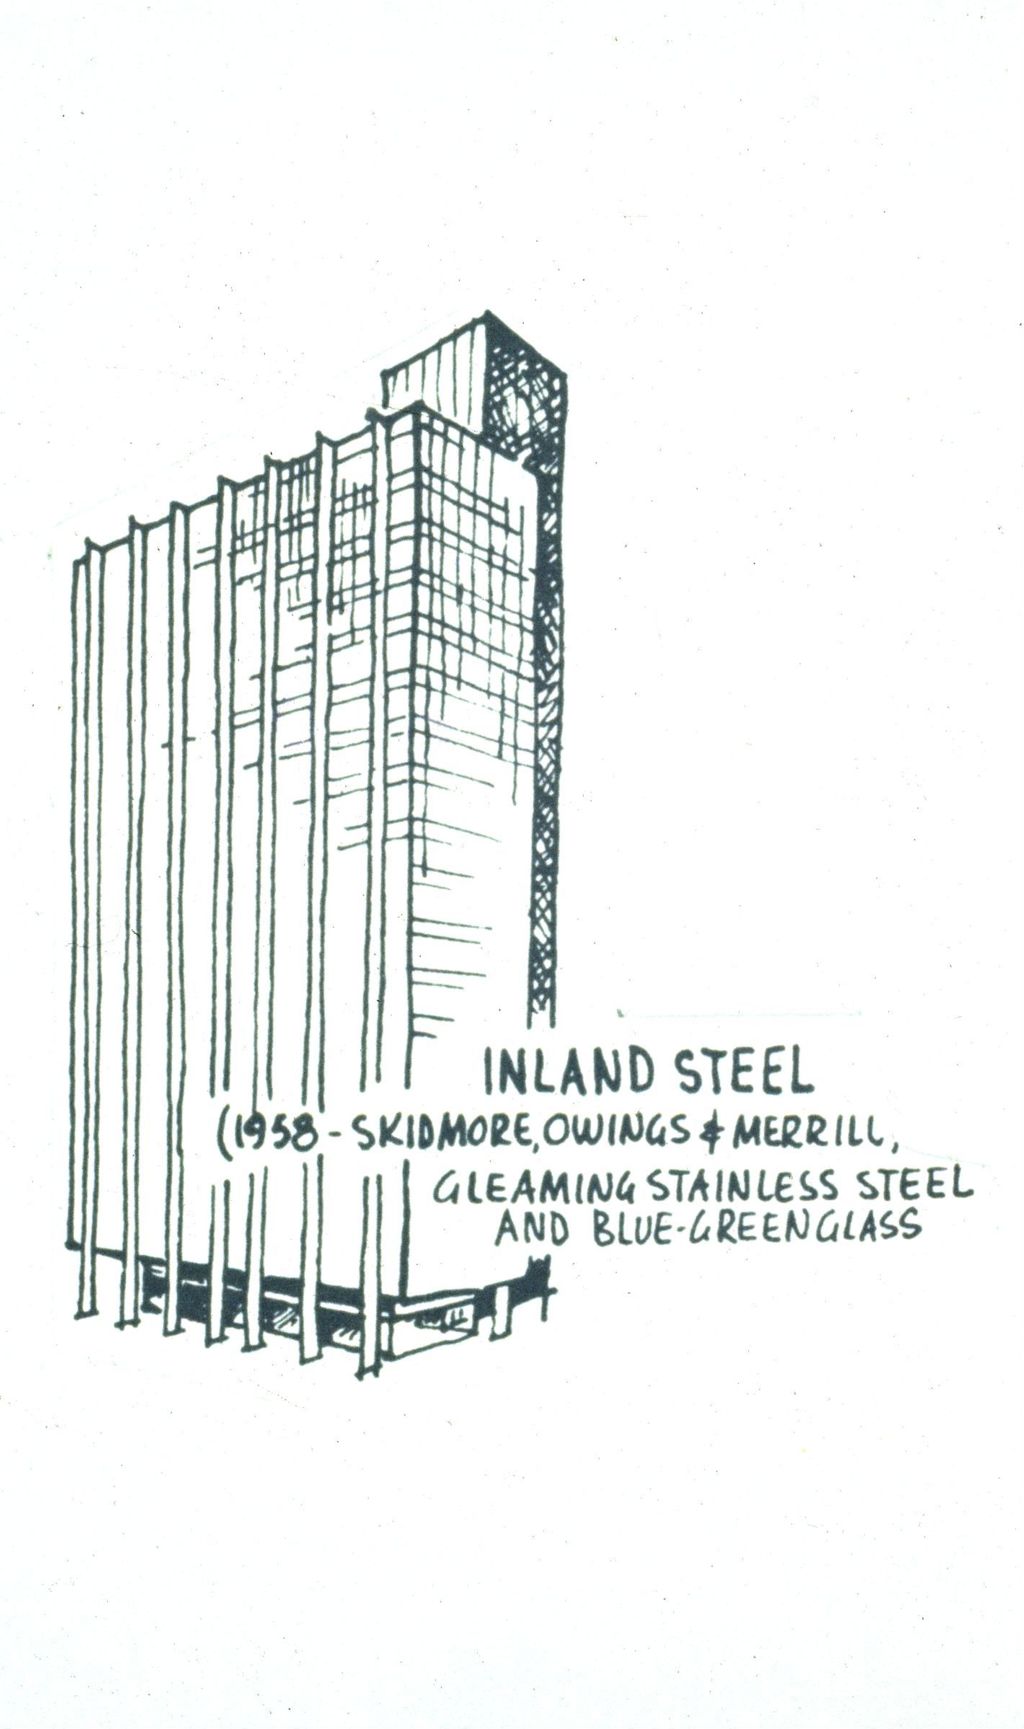 Miniature of Inland Steel Building